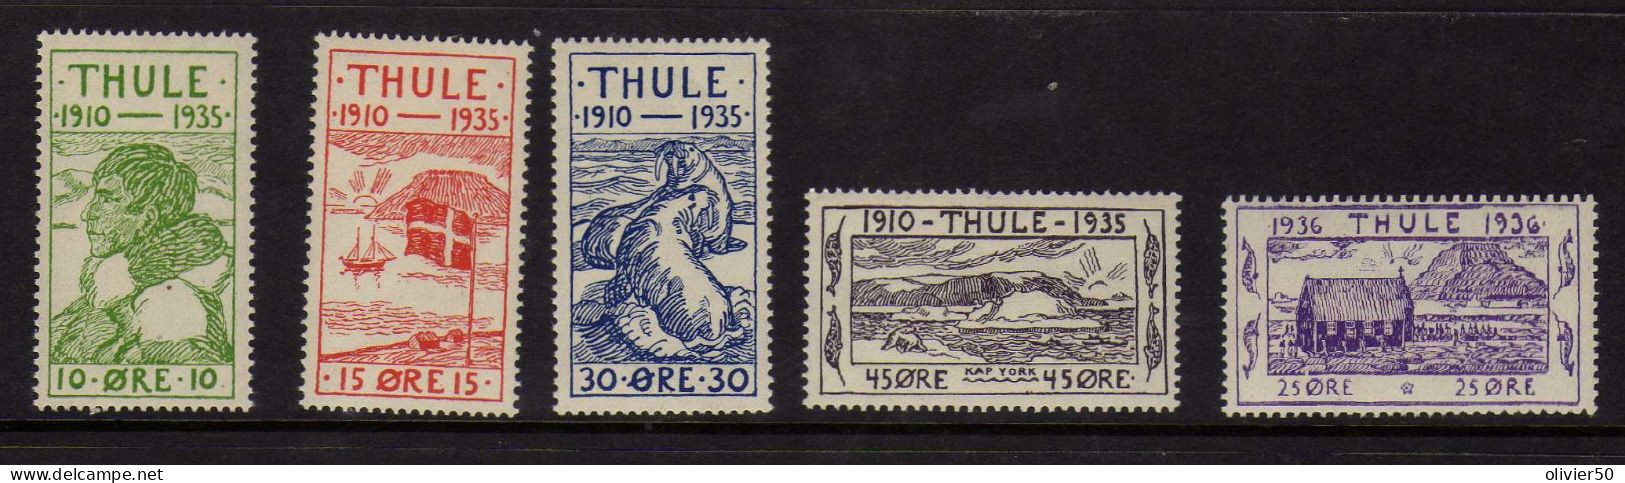 Groenland  - Thule - (1935-36) - Knud Rasmussen -  Morses - Paysages -  Neuf** - MNH - Thulé